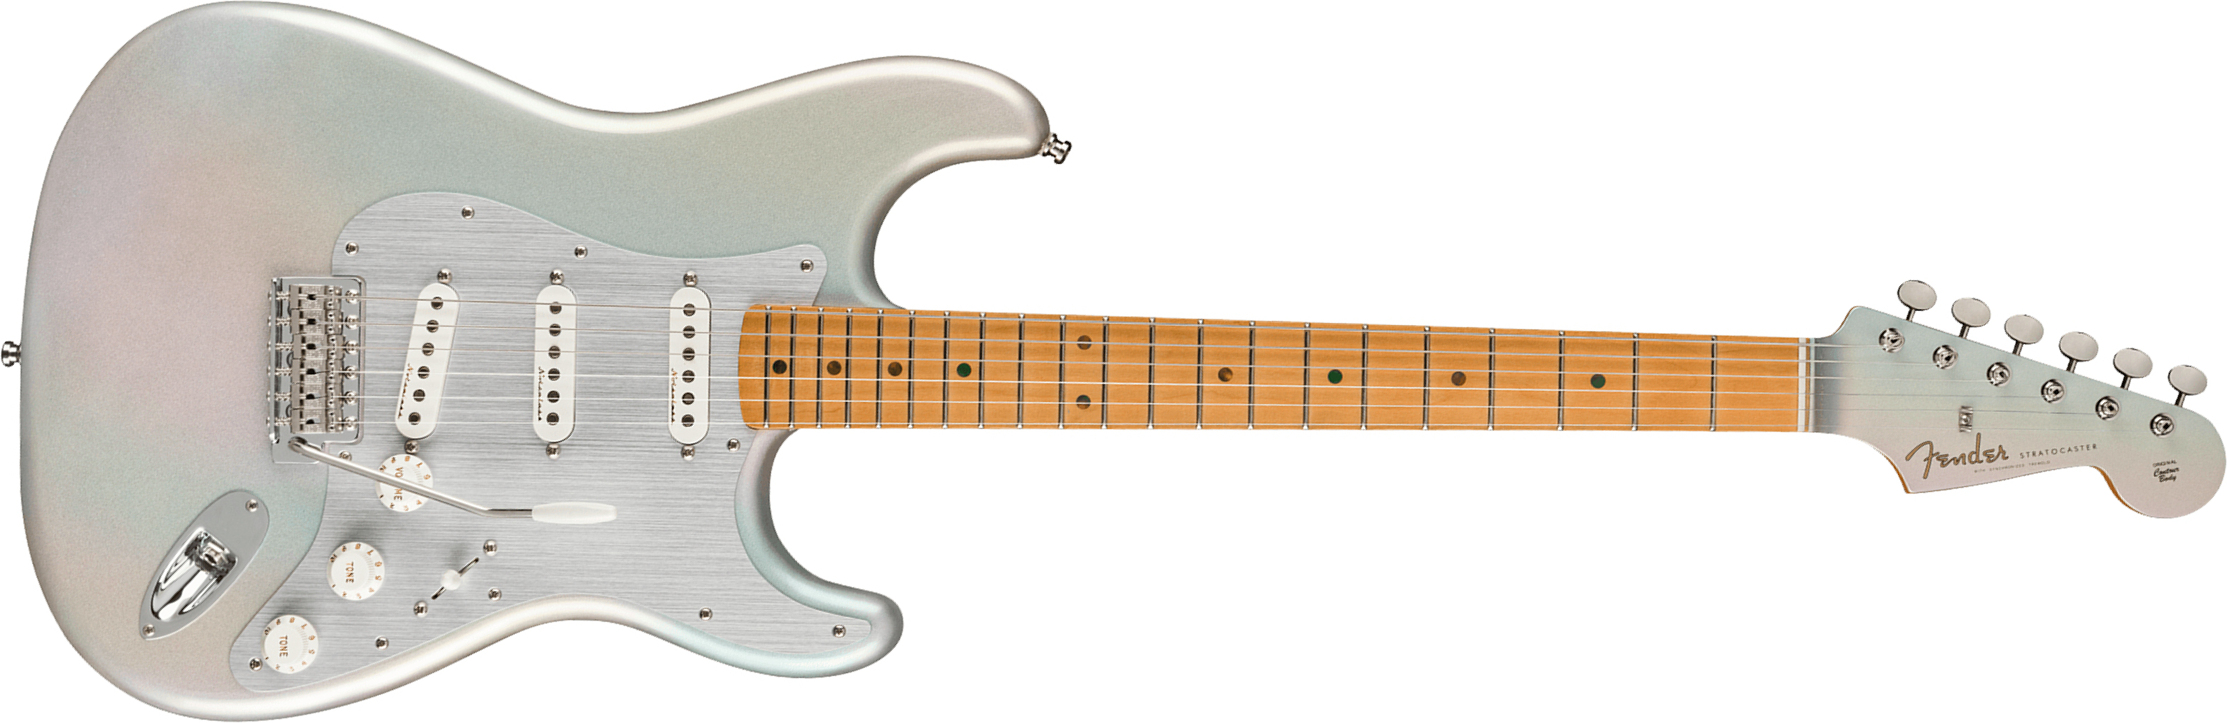 Fender H.e.r. Strat Signature Mex 3s Trem Mn - Chrome Glow - E-Gitarre in Str-Form - Main picture